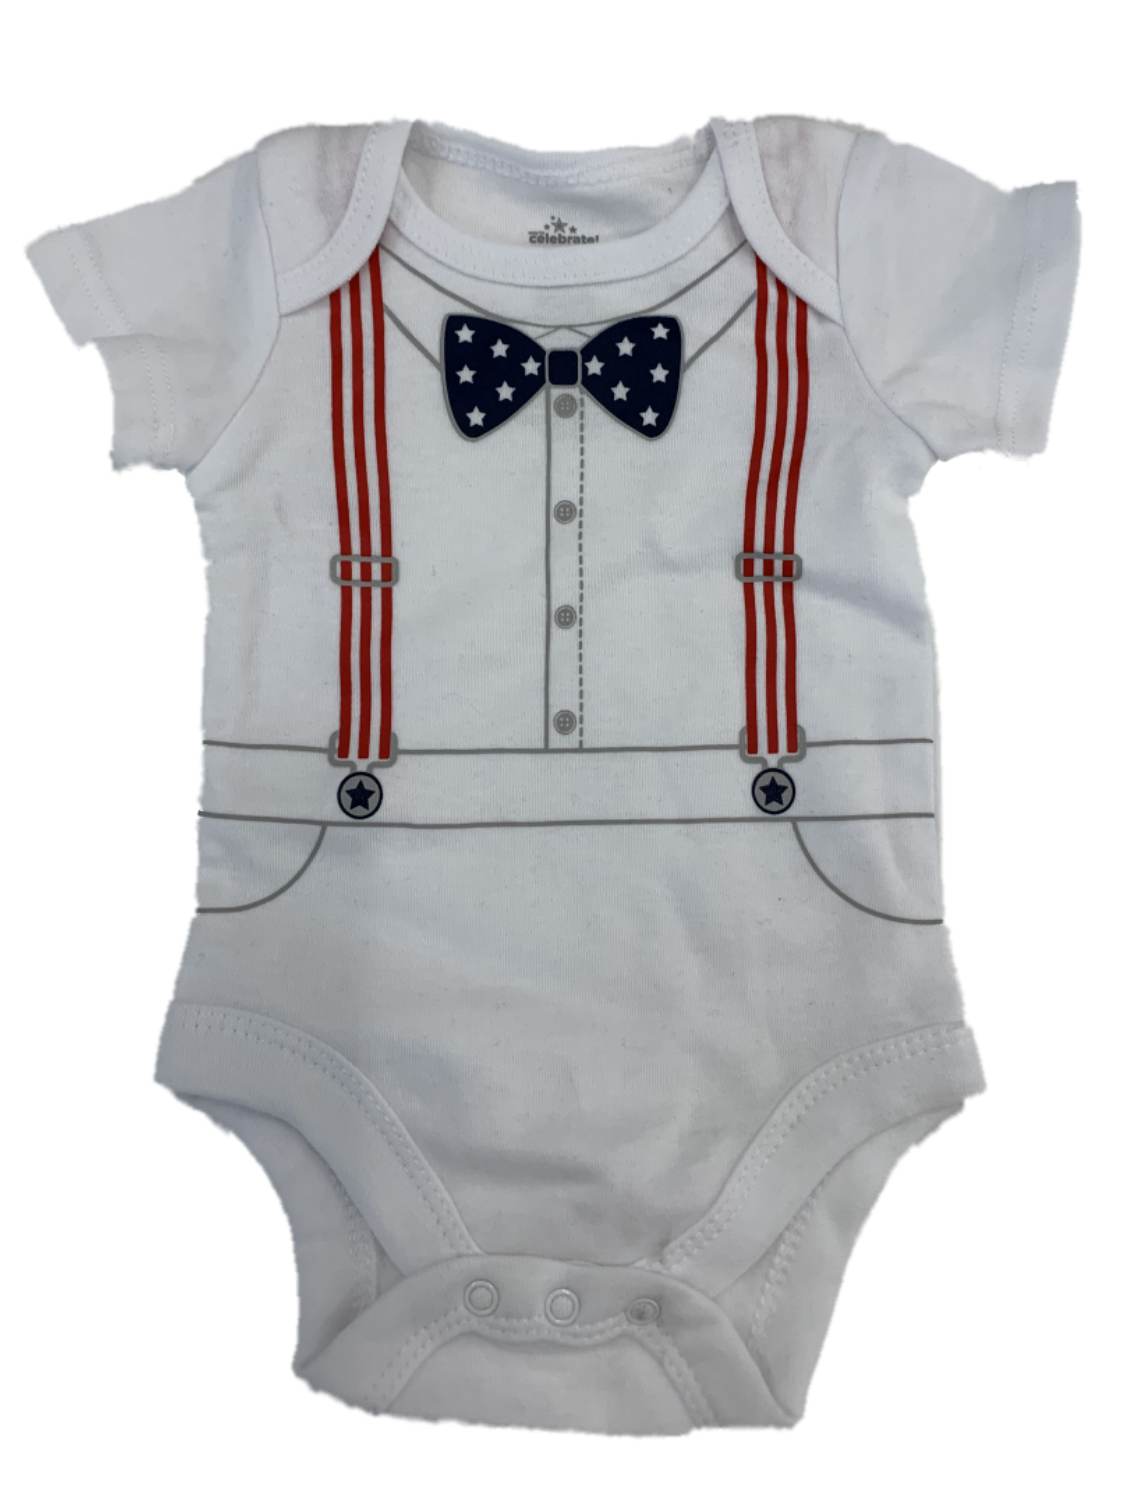 Celebrate Infant Baby Boys Patriotic Bow Tie & Suspender White Bodysuit Outfit